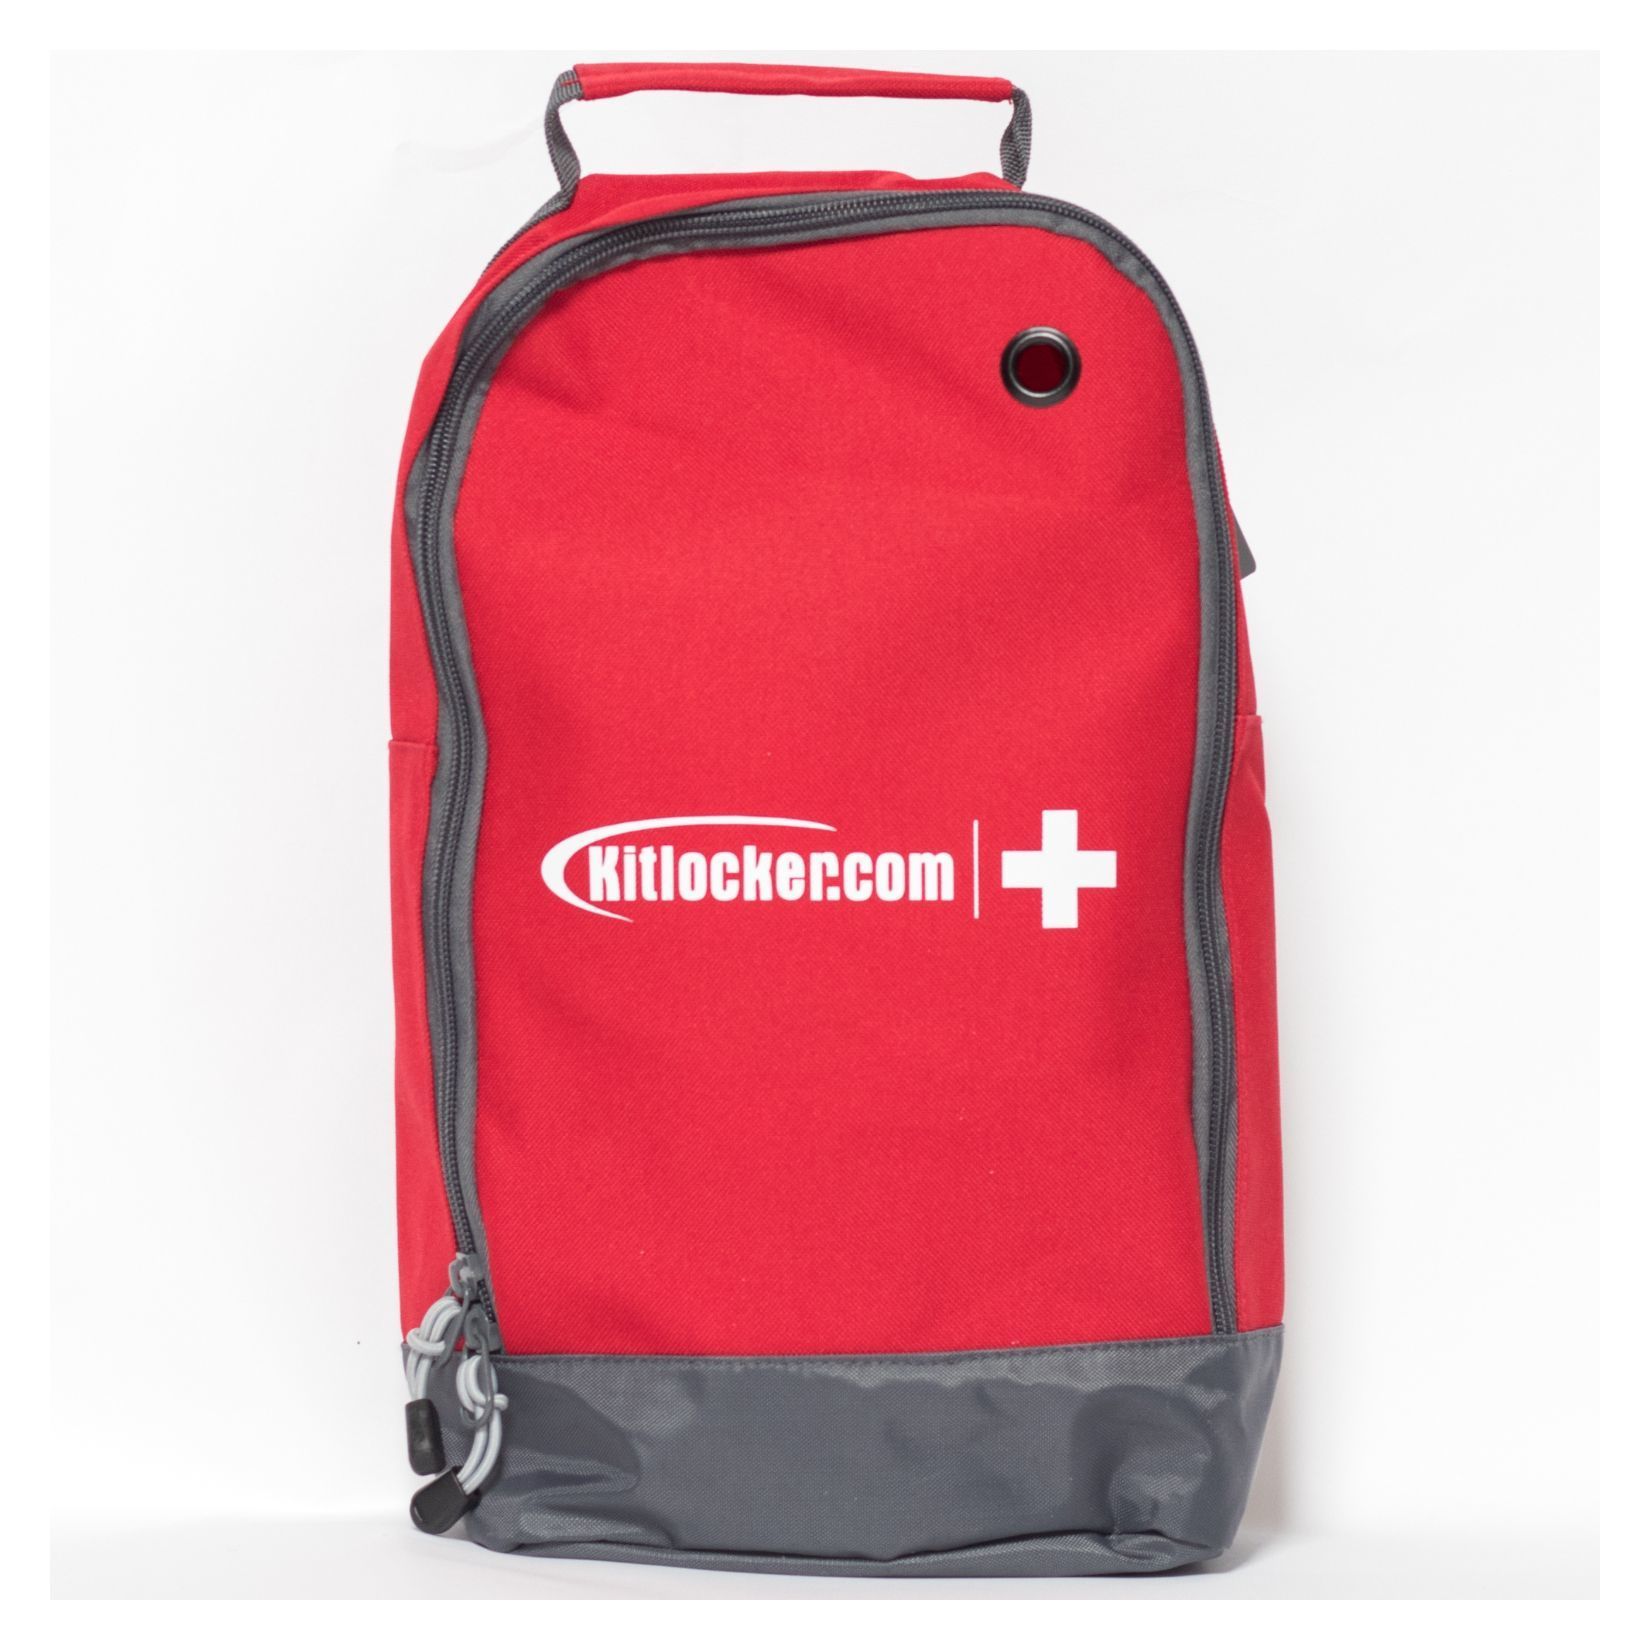 Kitlocker Children’s First Aid Kit (including Bag)